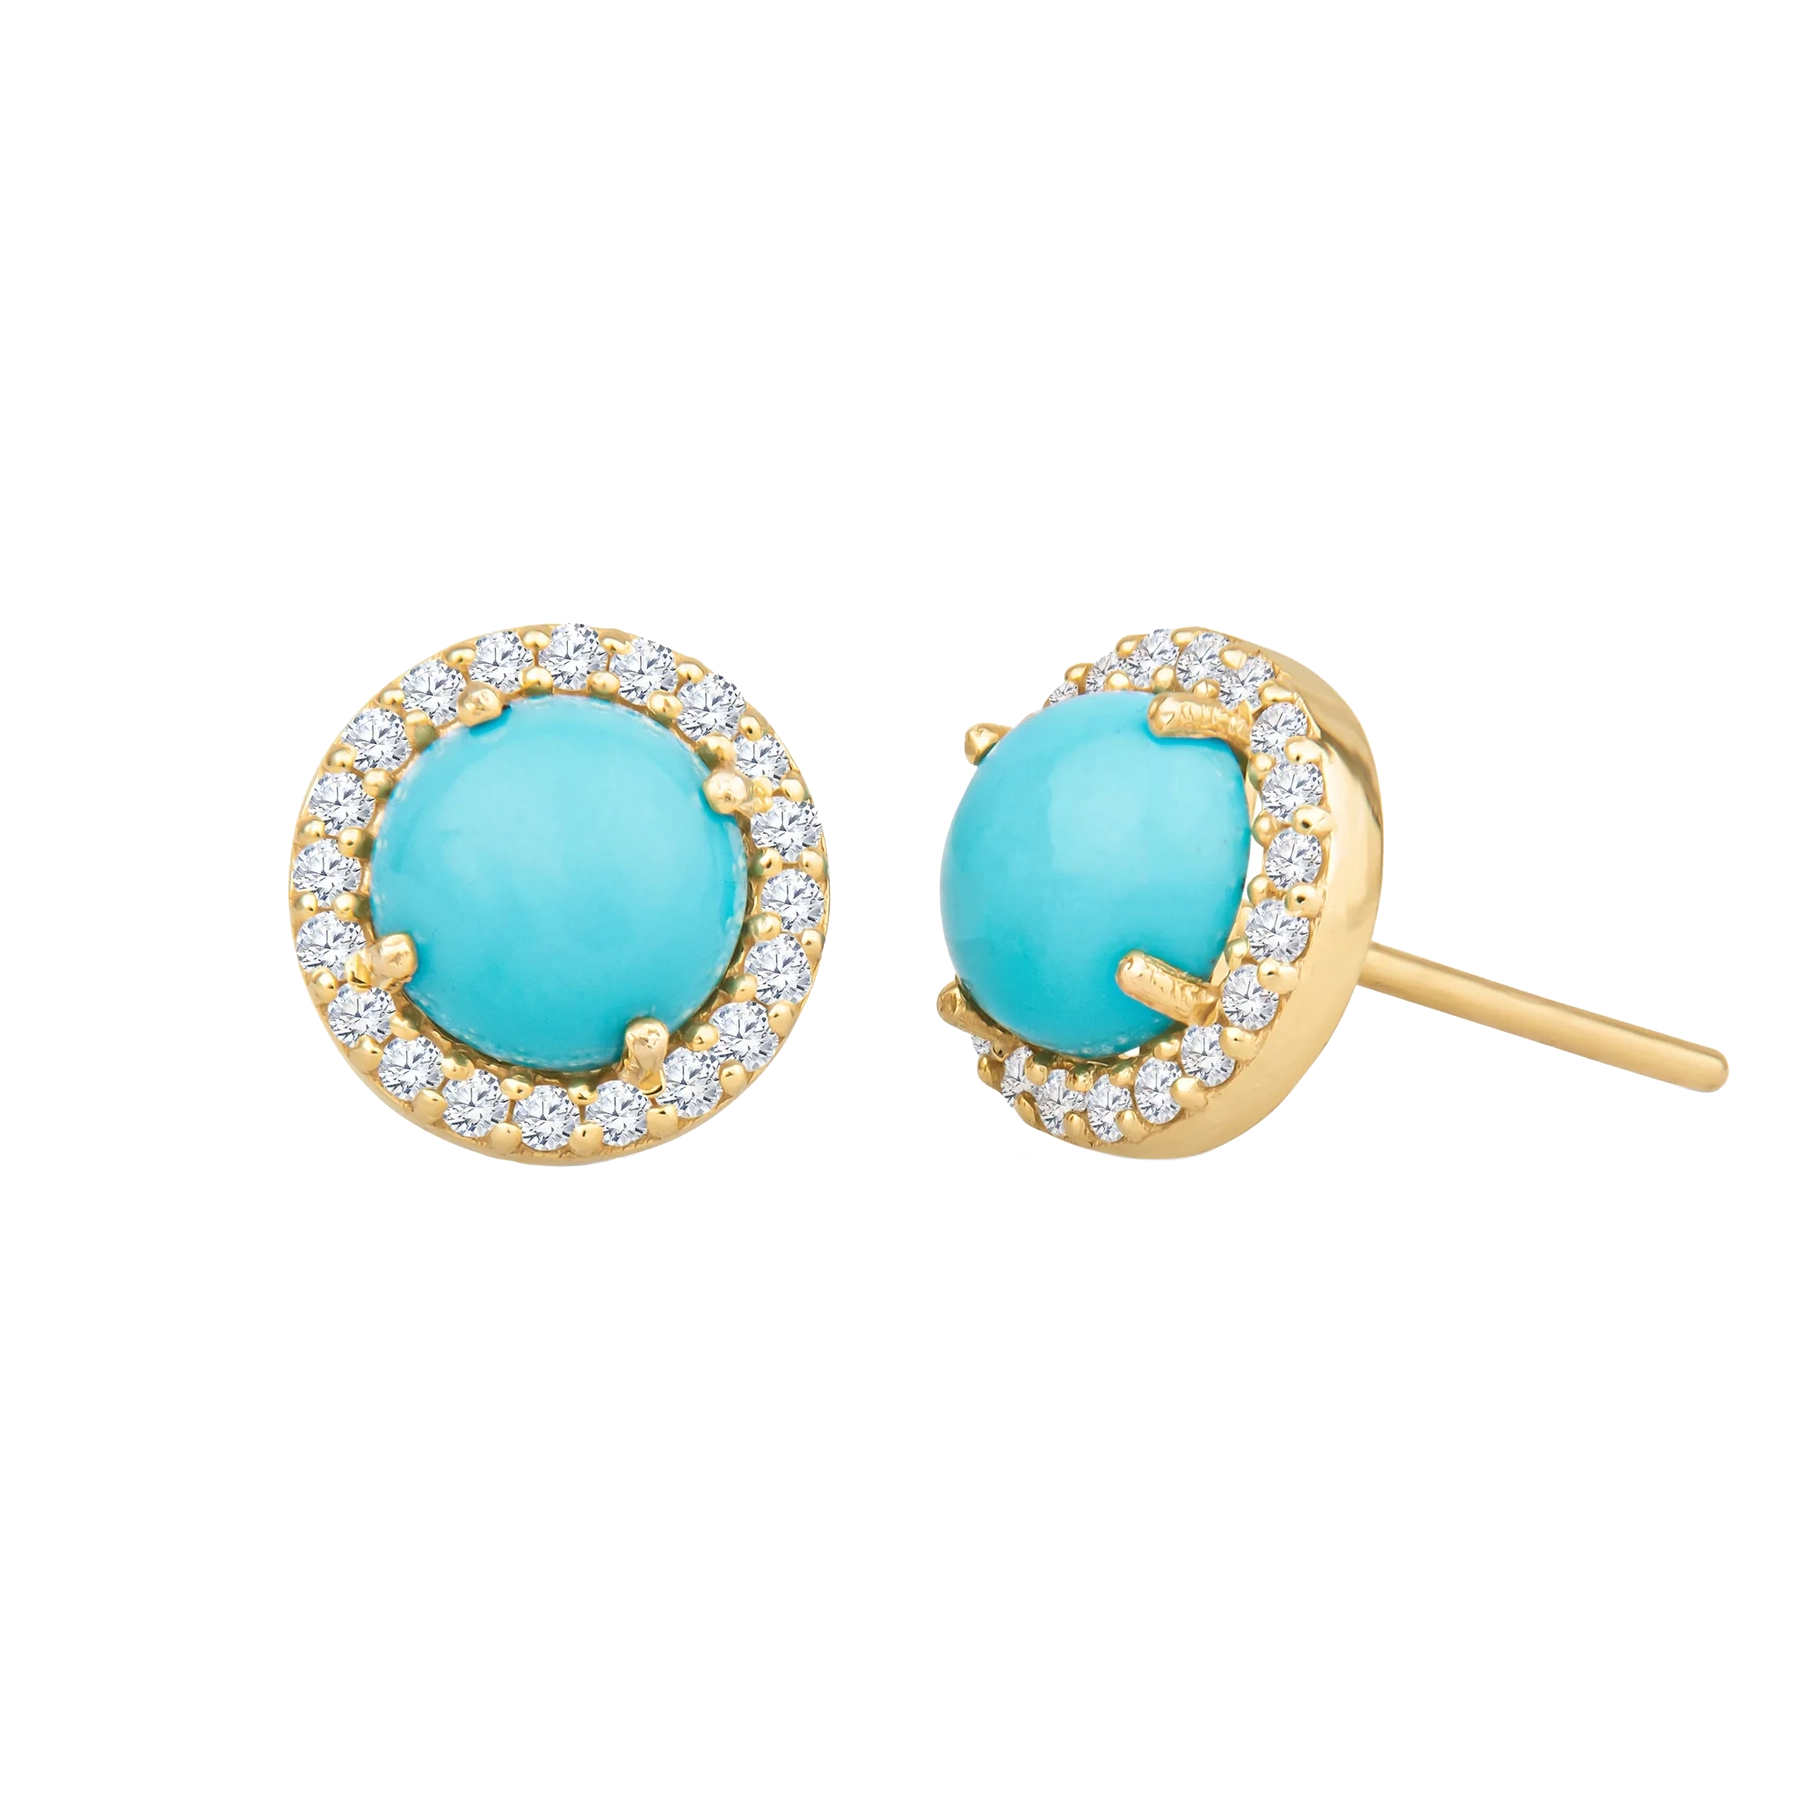 Christina Greene Jewelry 14K Gold & Turquoise Stud Earrings with White Diamonds 